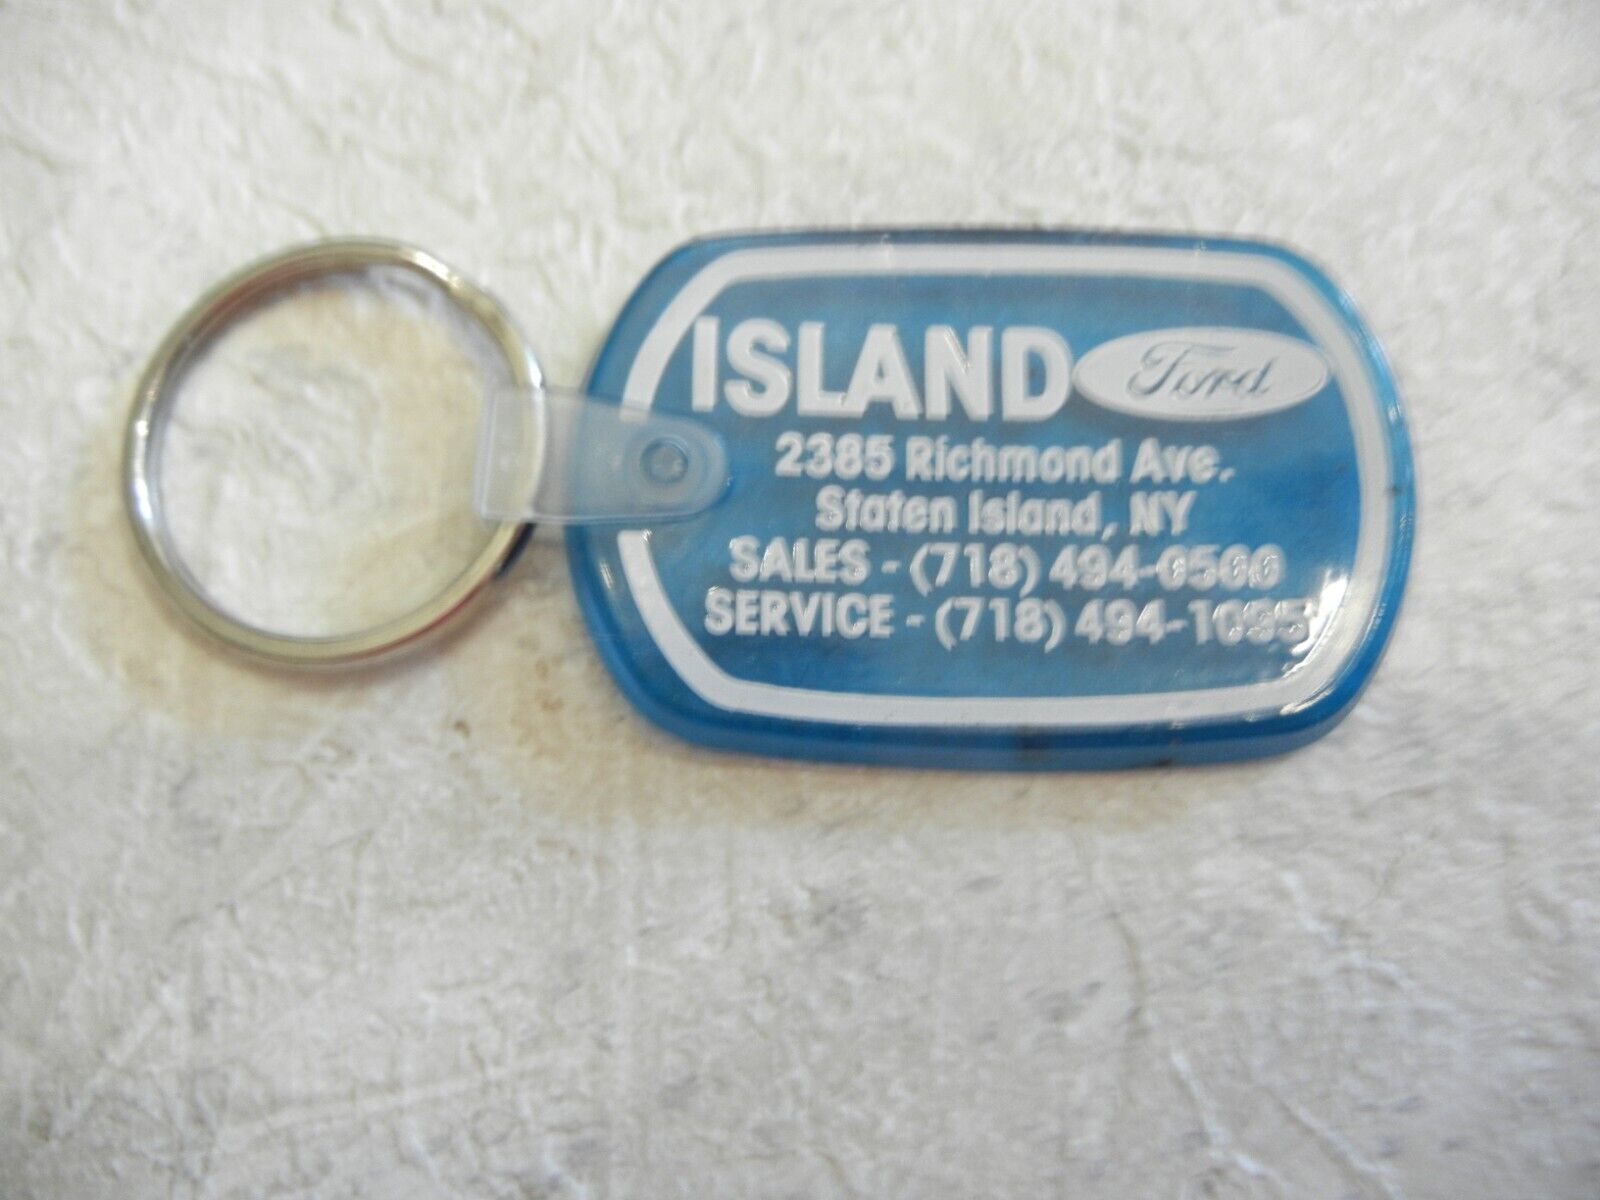 Ford Memorabilia Key Chain From Island Ford NY